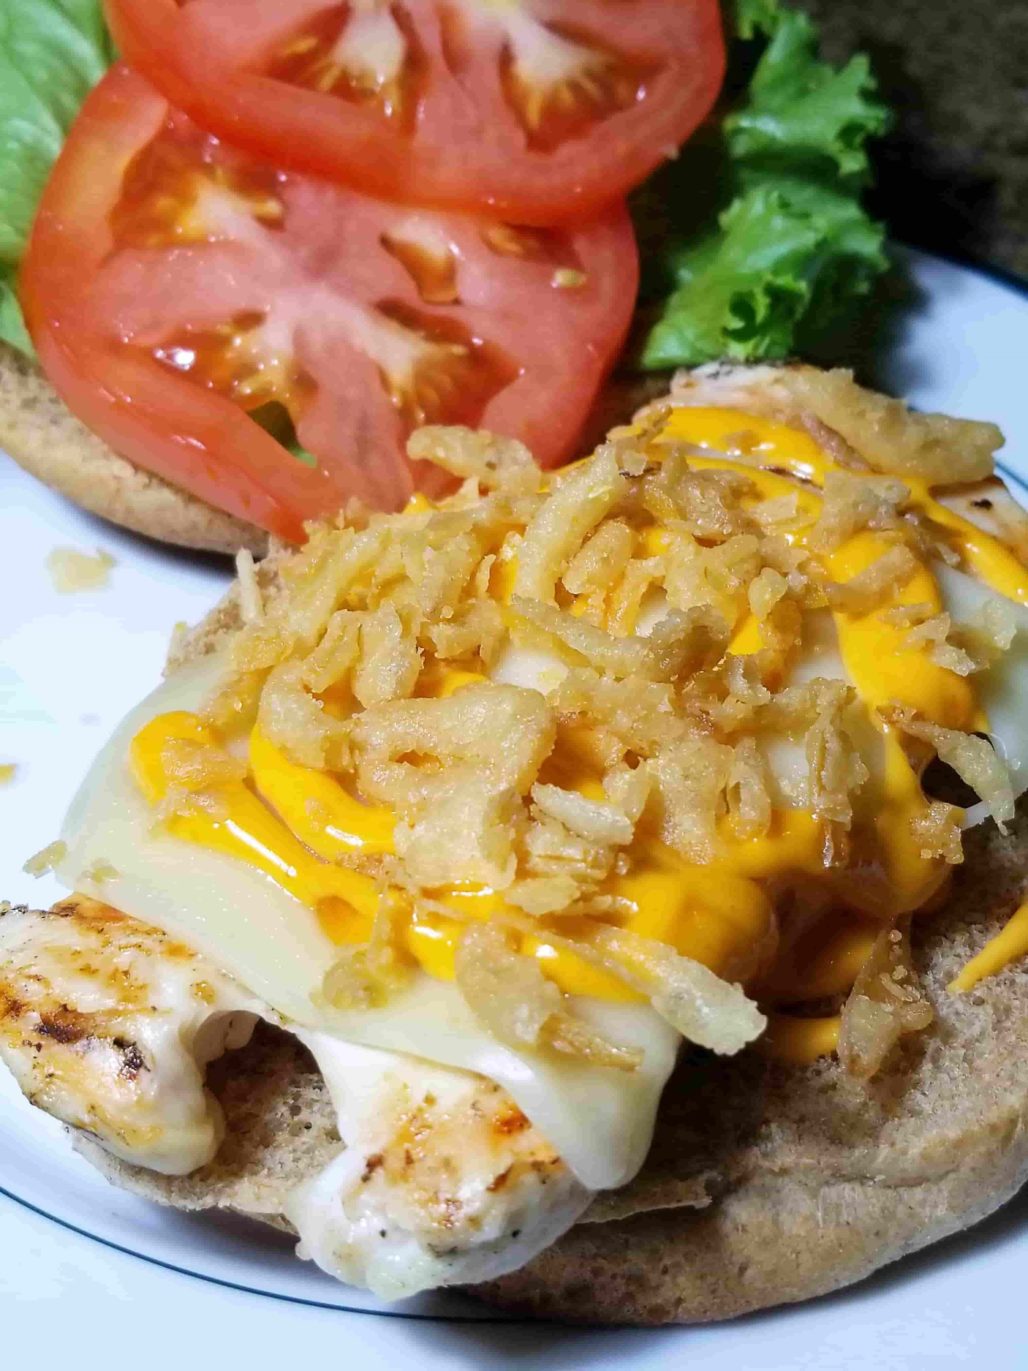 Copia del sándwich de pollo con Sriracha de McDonald's Open Face